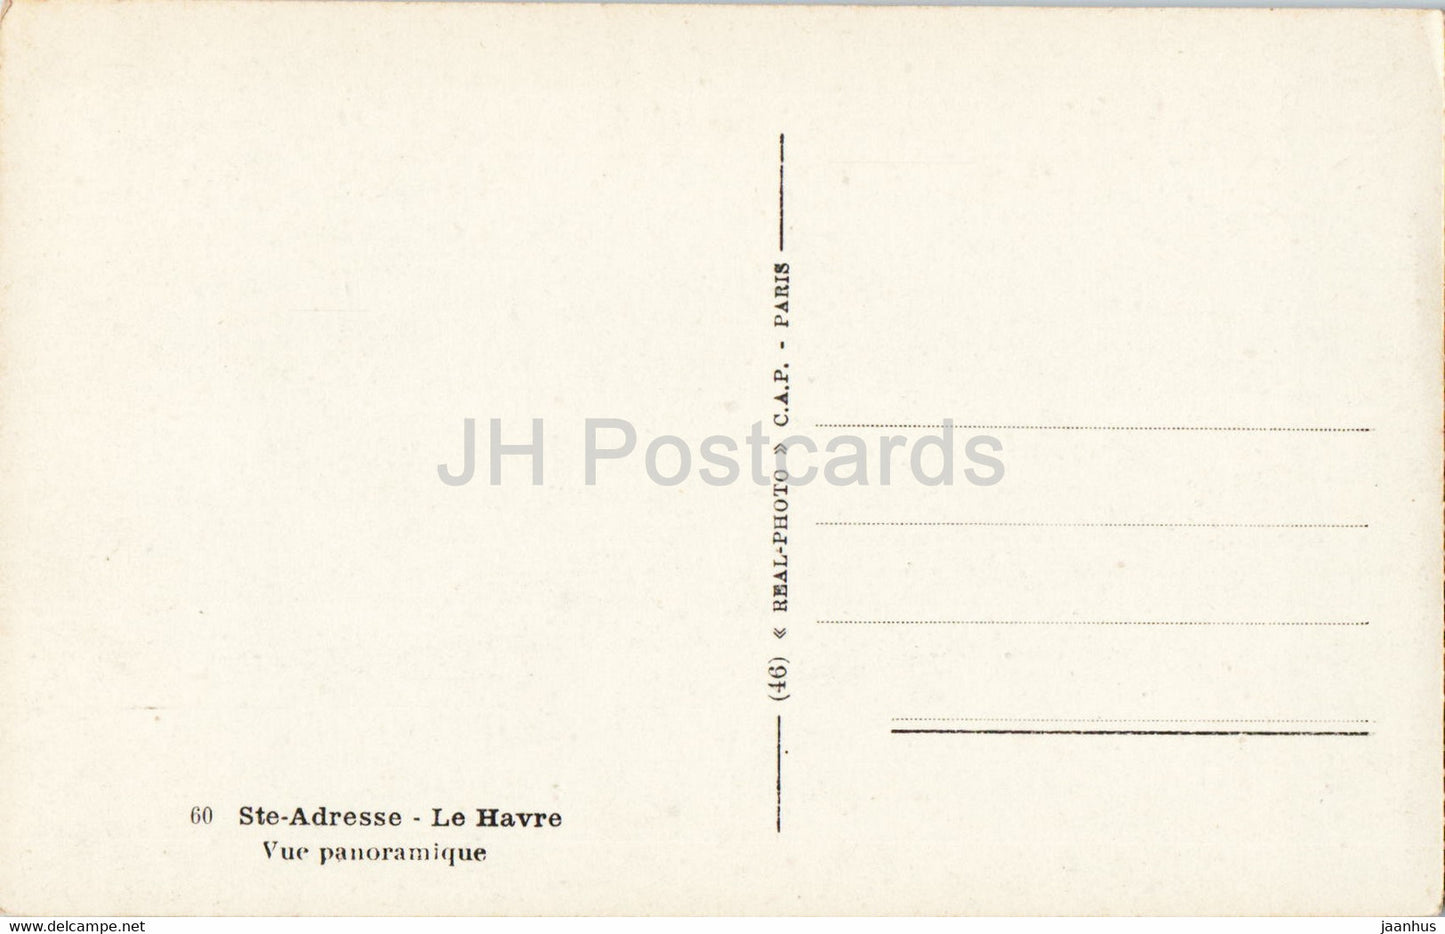 Ste Adresse - Le Havre - Vue panoramique - tram - 60 - old postcard - France - unused